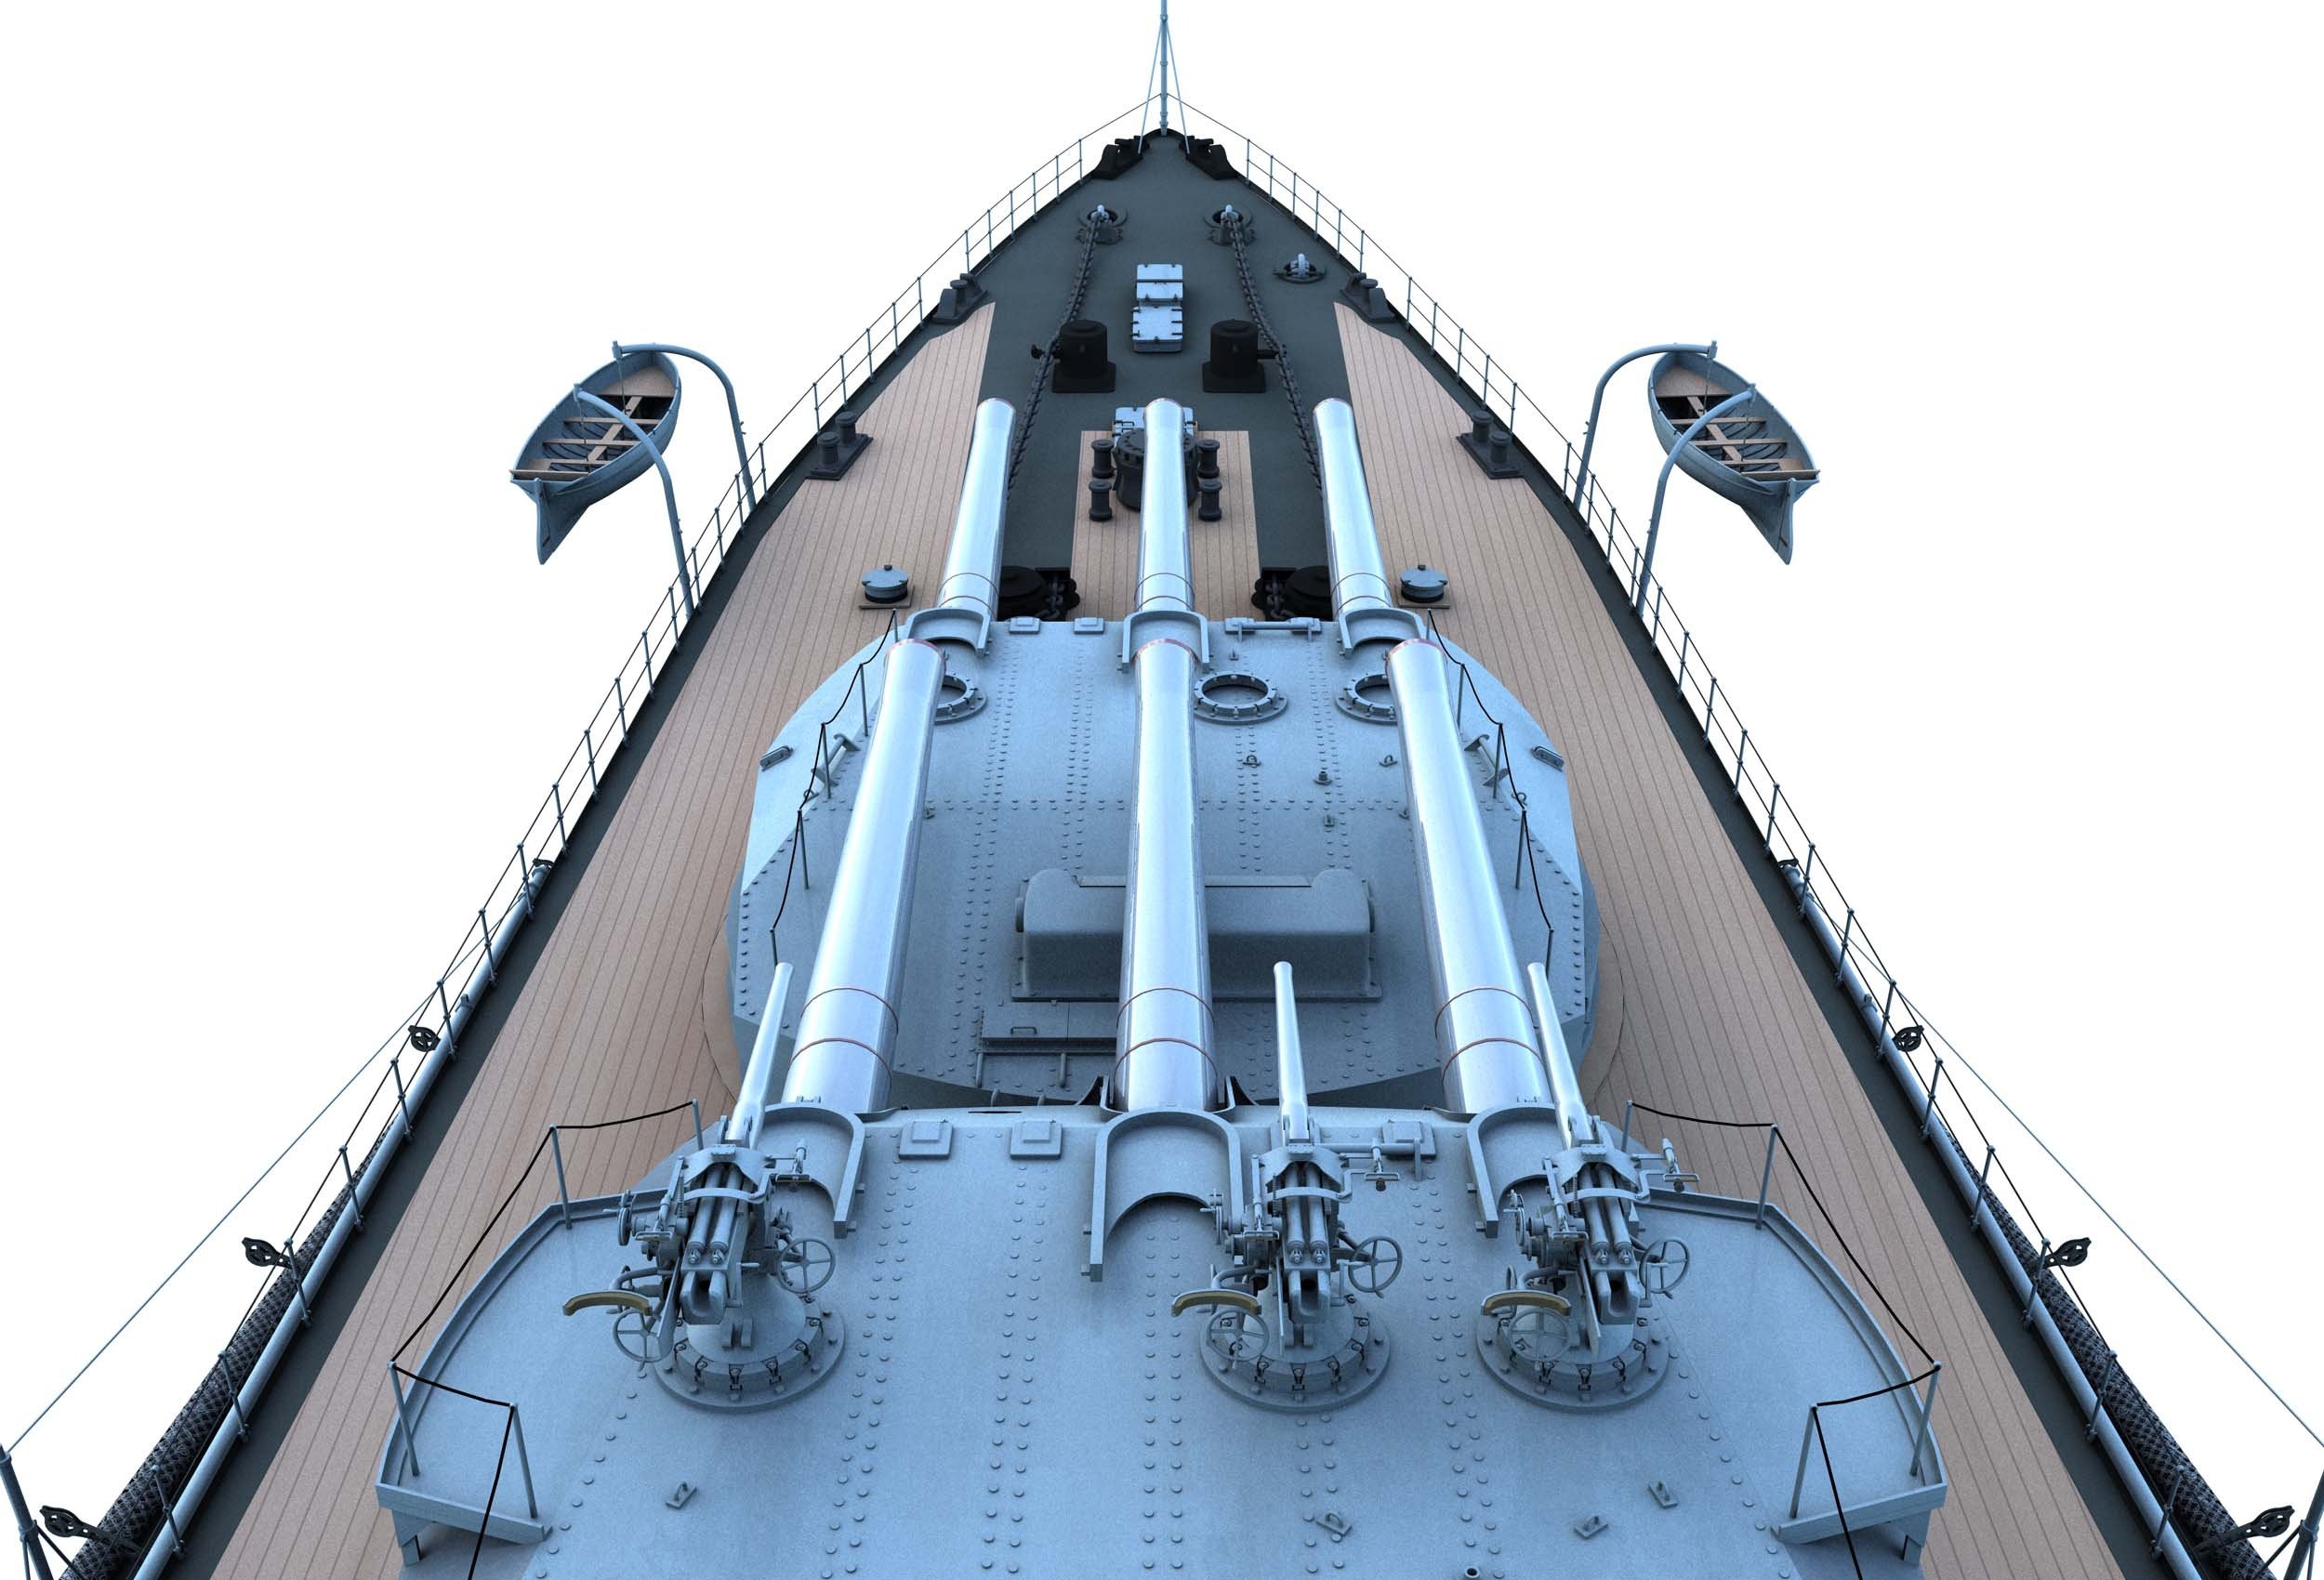 https://0901.nccdn.net/4_2/000/000/038/2d3/CK9-Partial-Ship-Turrets-A-B-Looking-Forward-2500x1700.jpg